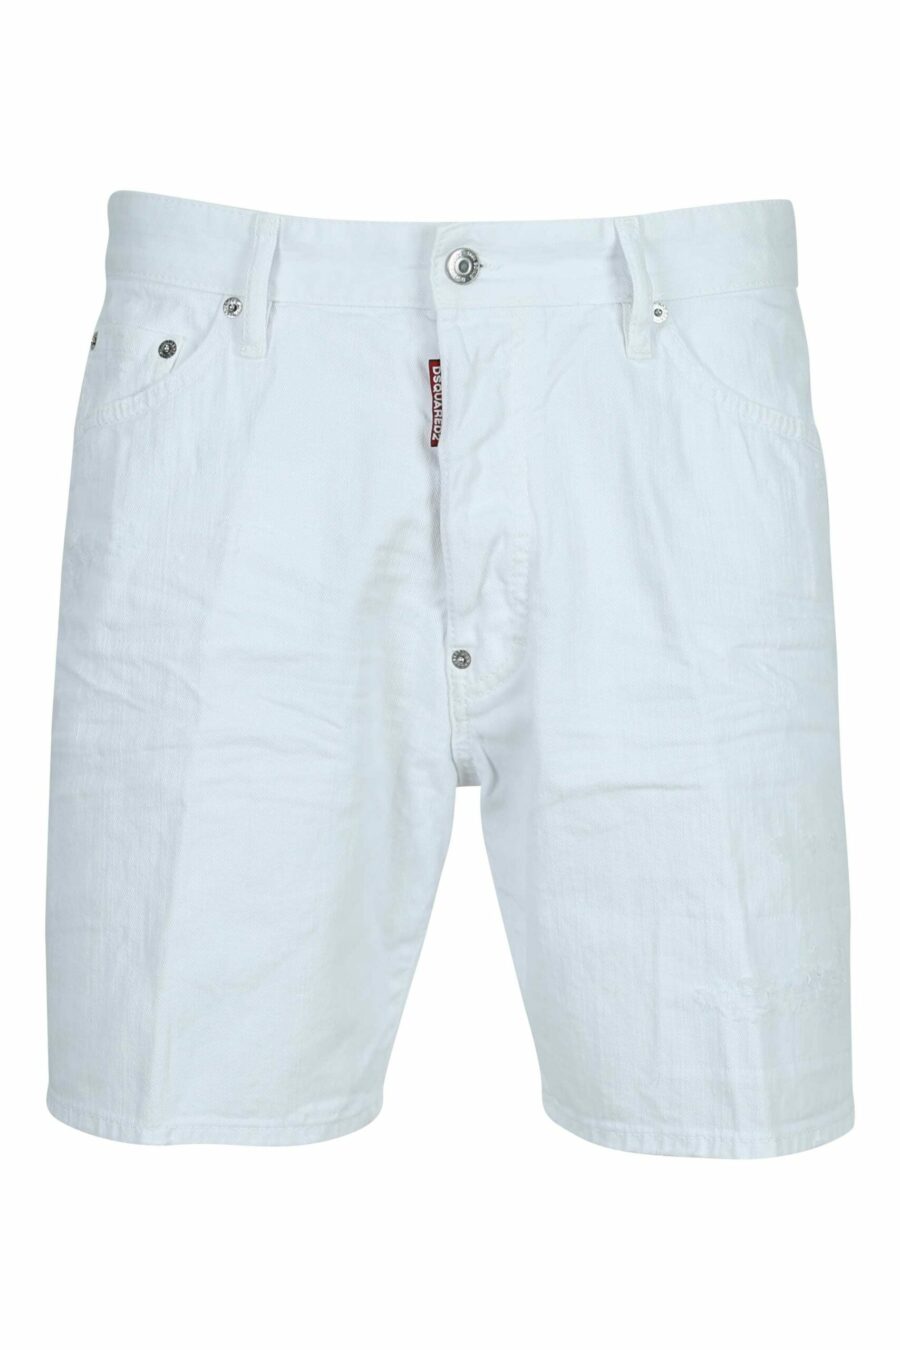 White denim shorts "marine short" - 8054148478155 scaled